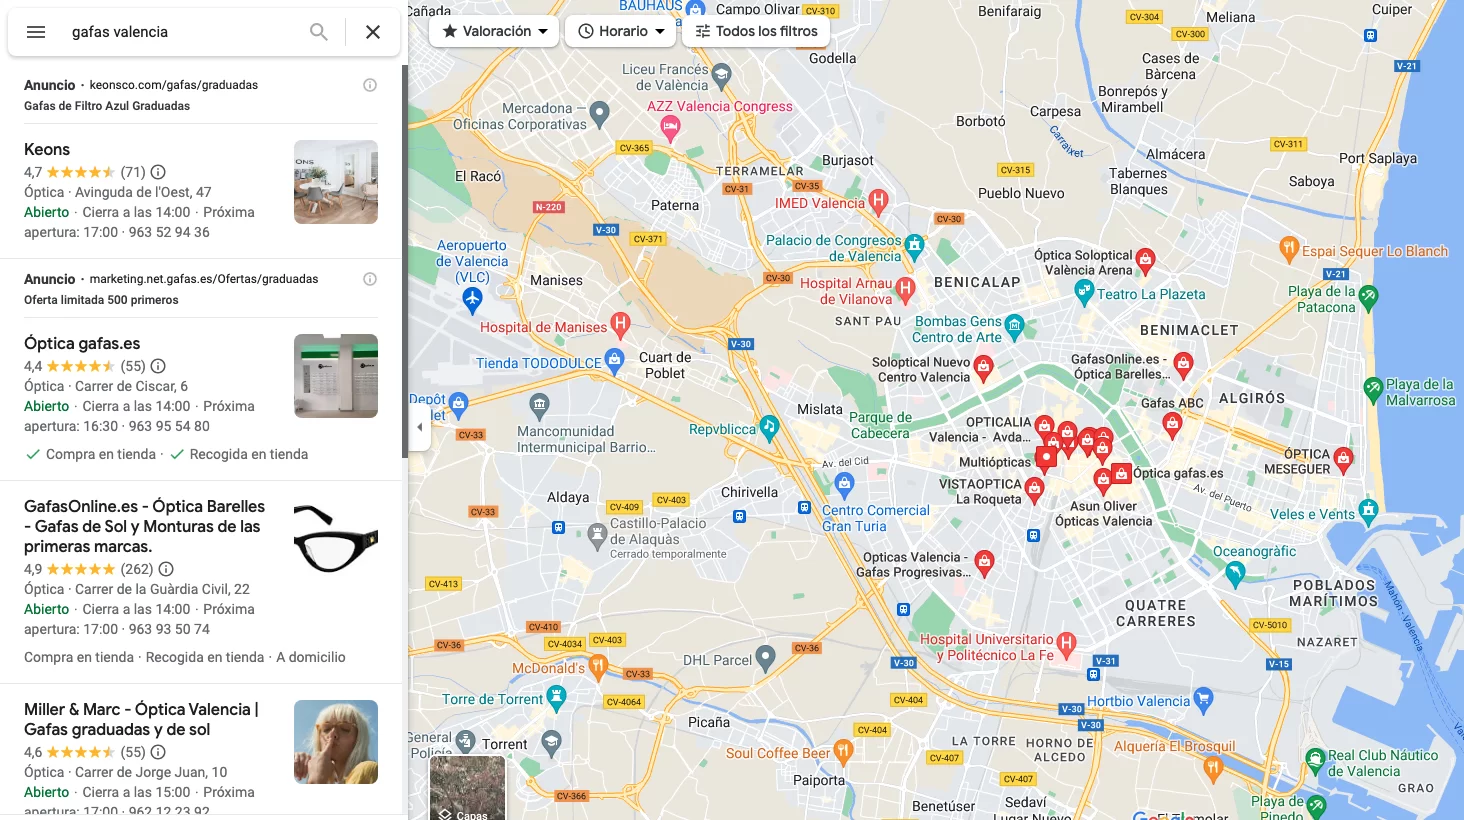 Campañas publicitarias google maps